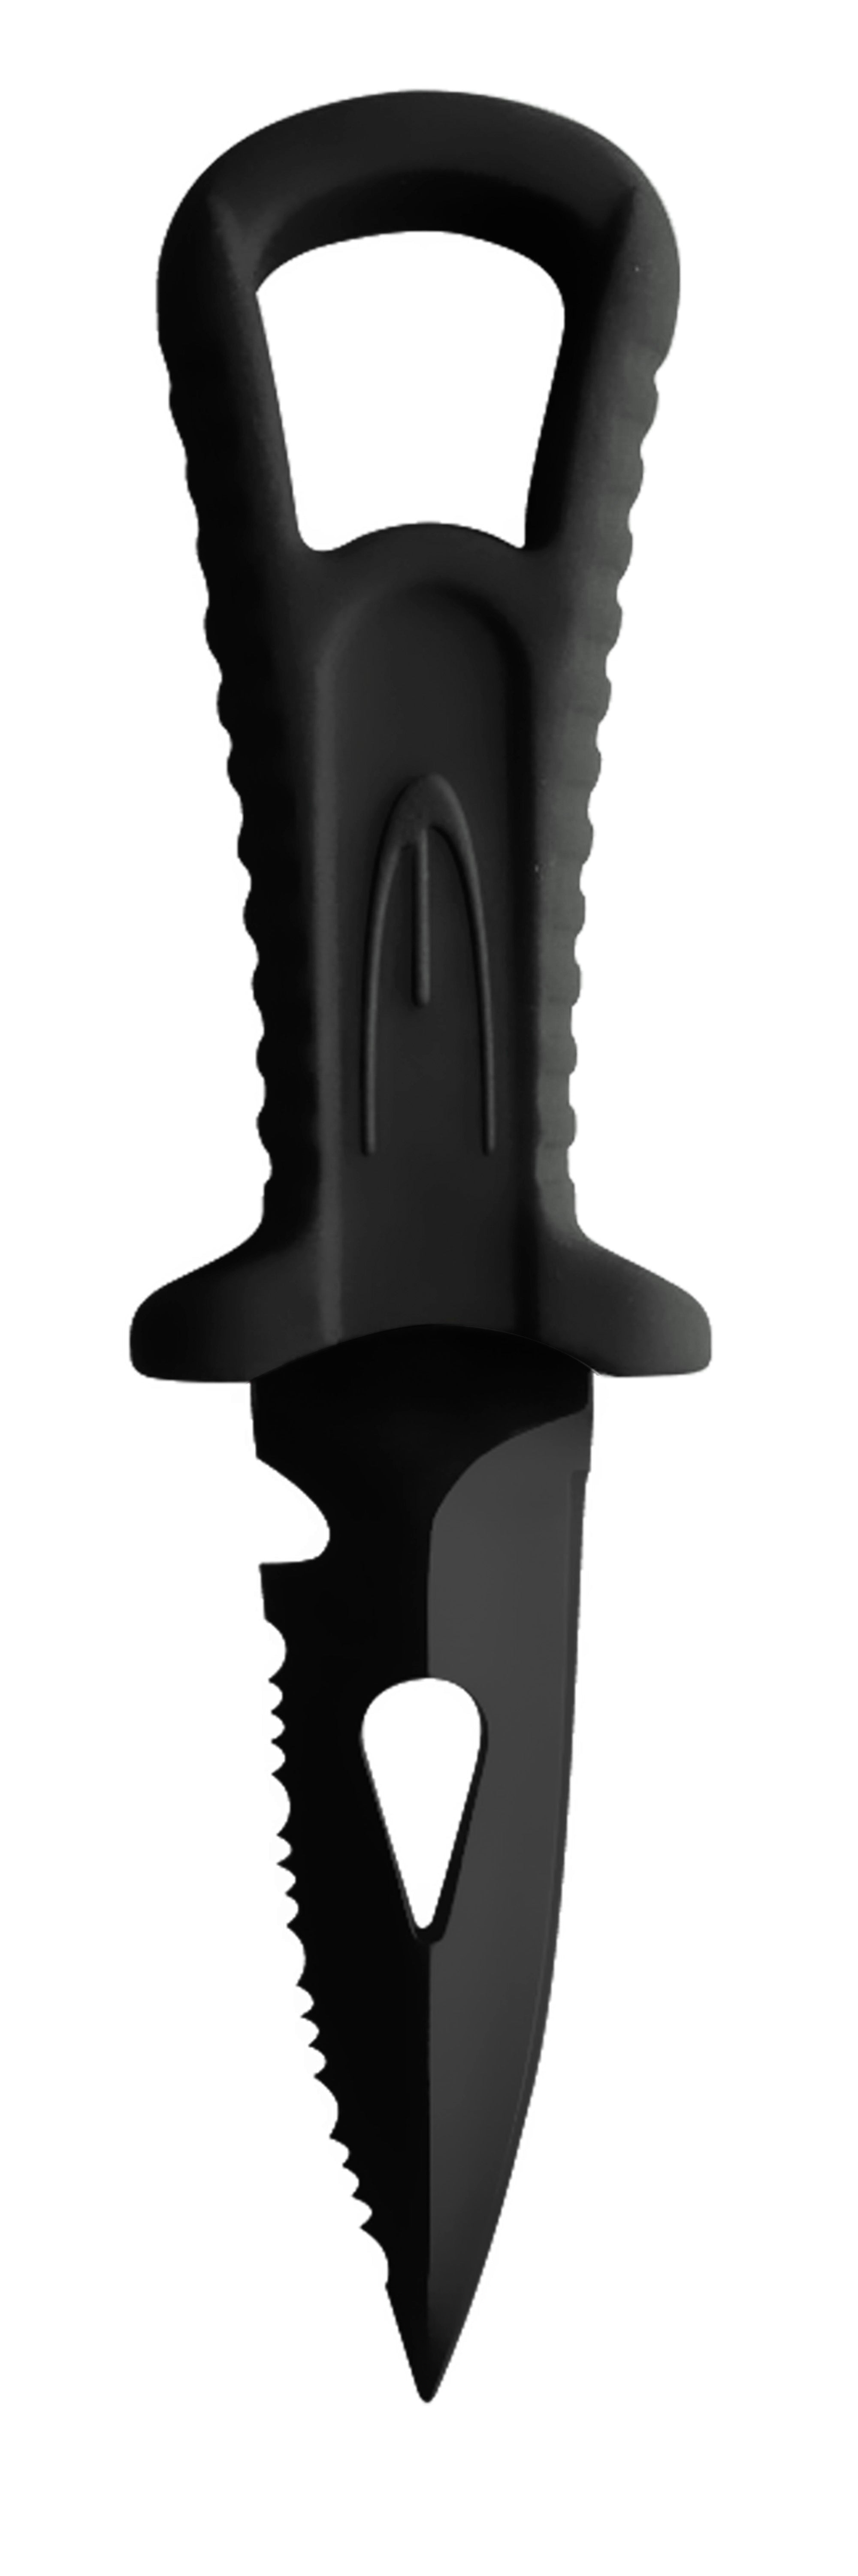 Epsealon Miniblade Dive Knife - Titanium Coated